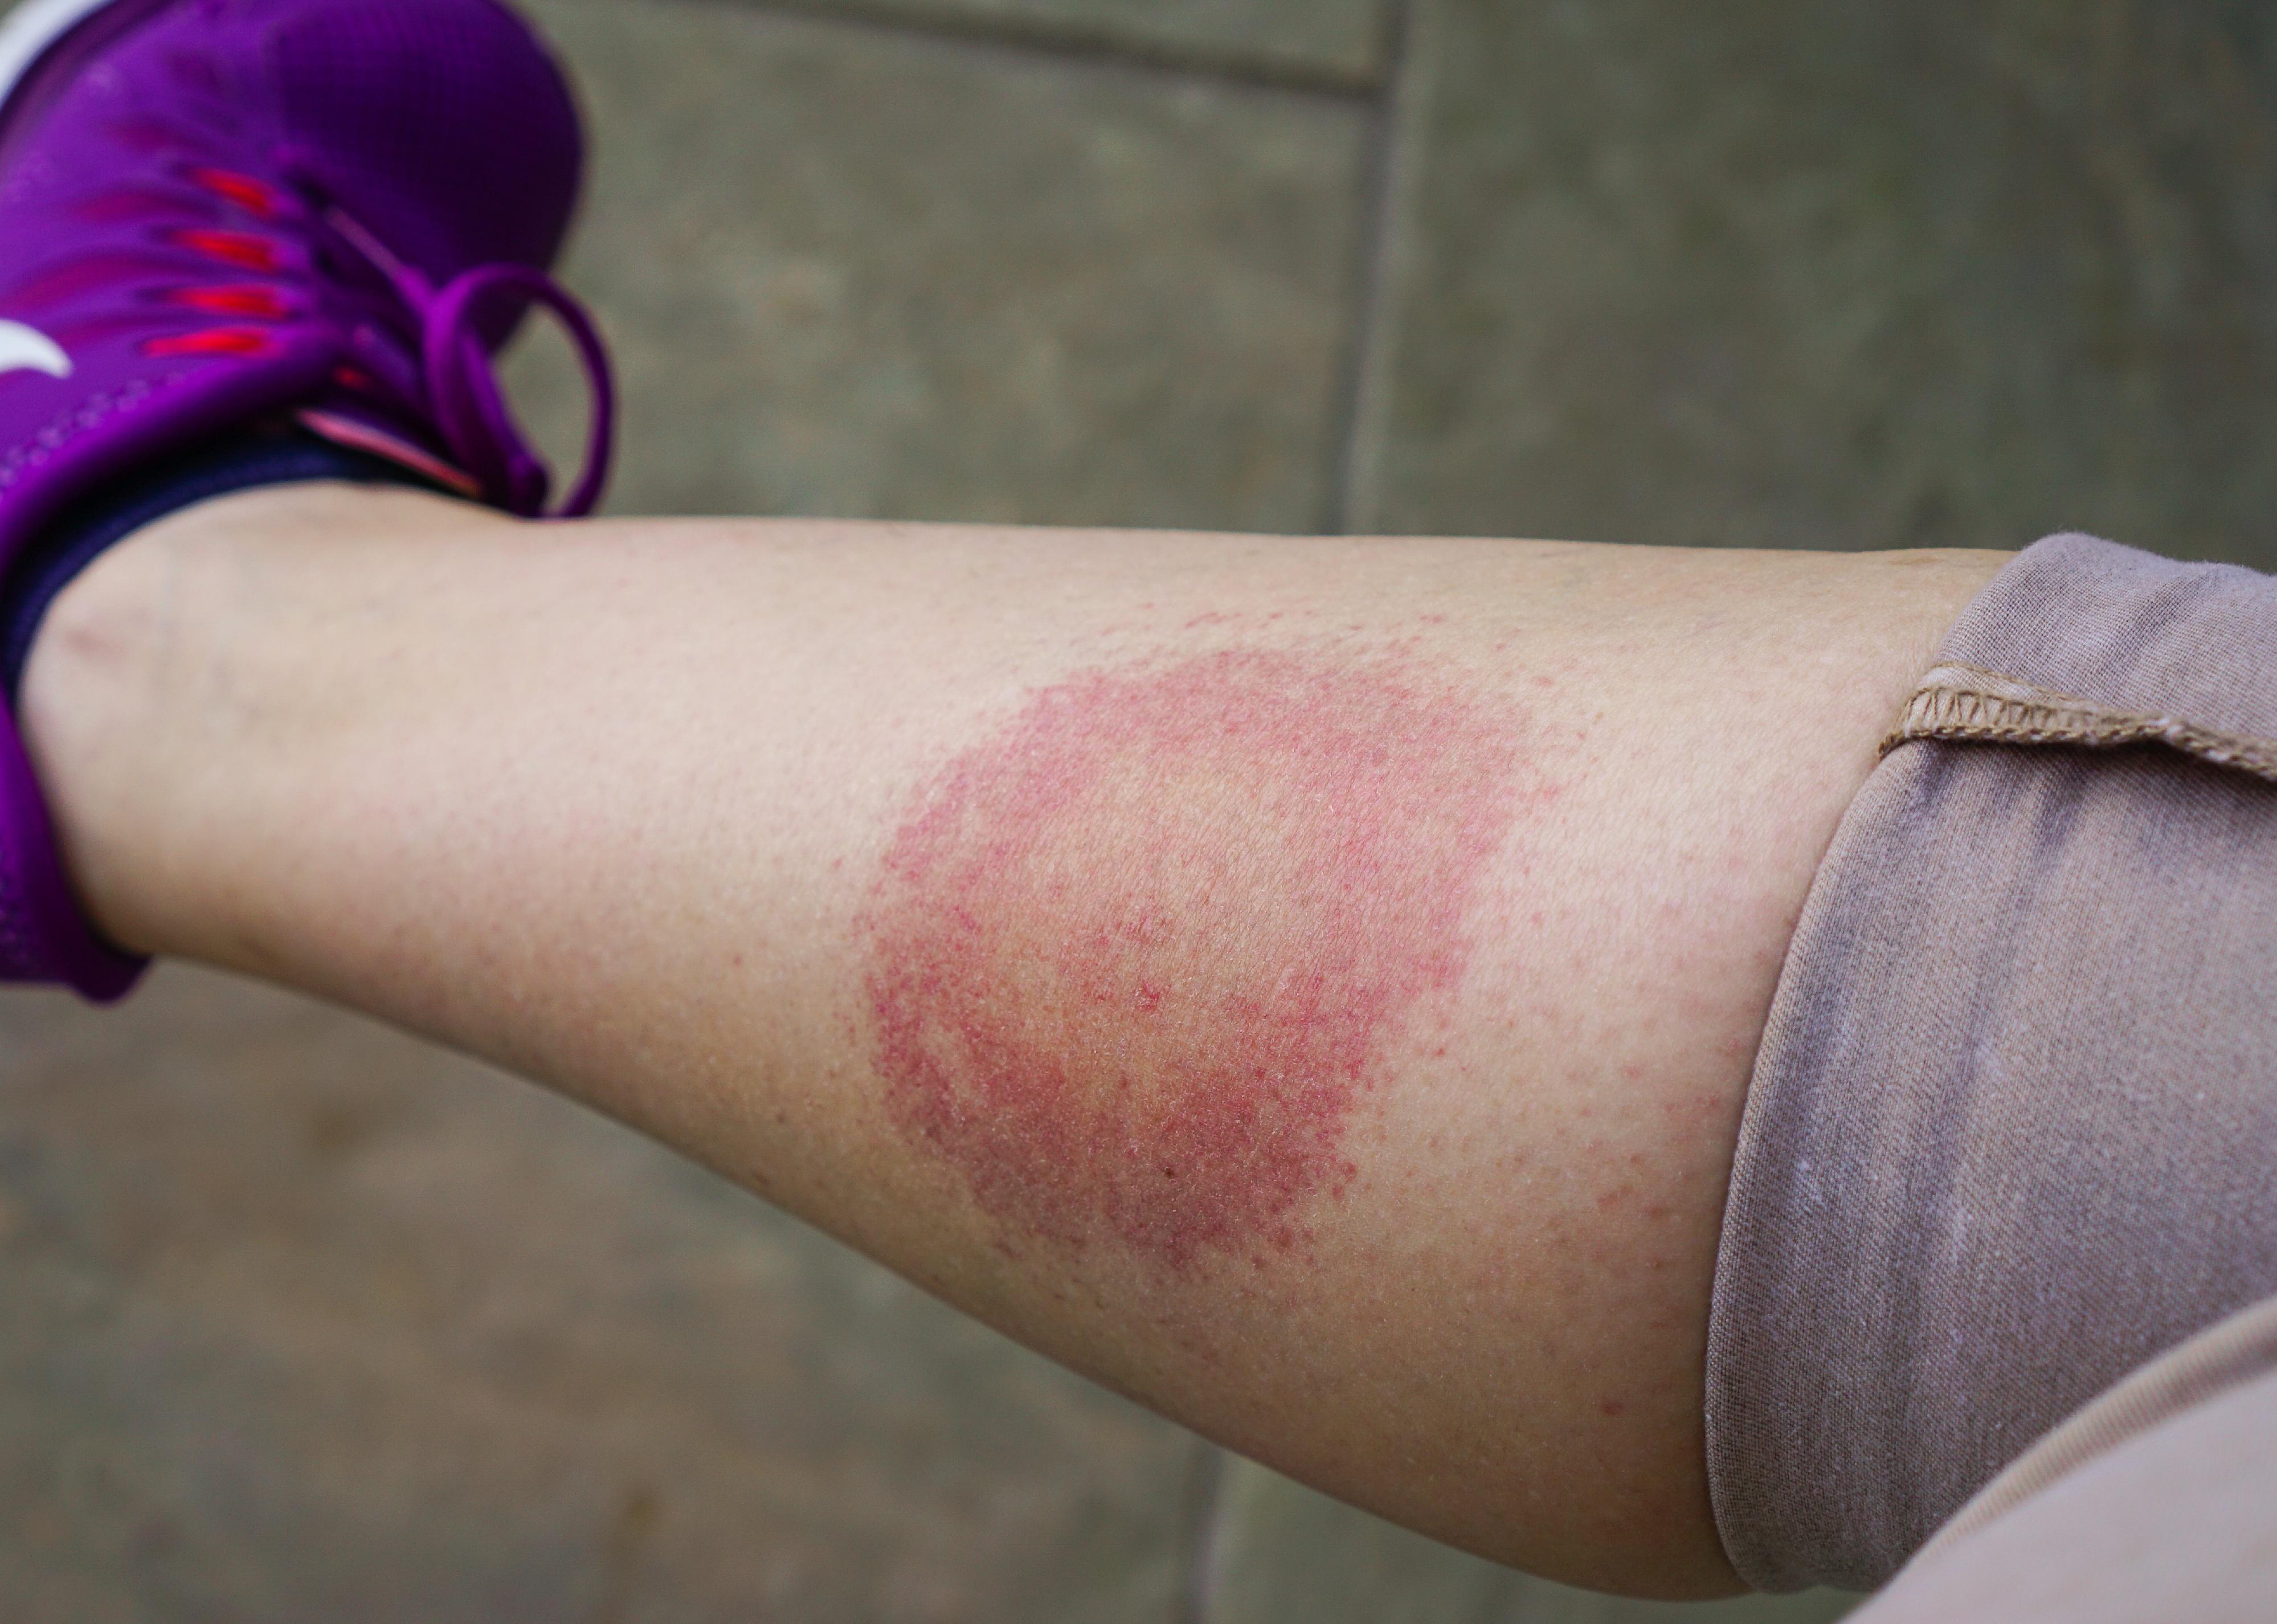 A close up of a person's leg bitten by a tick.